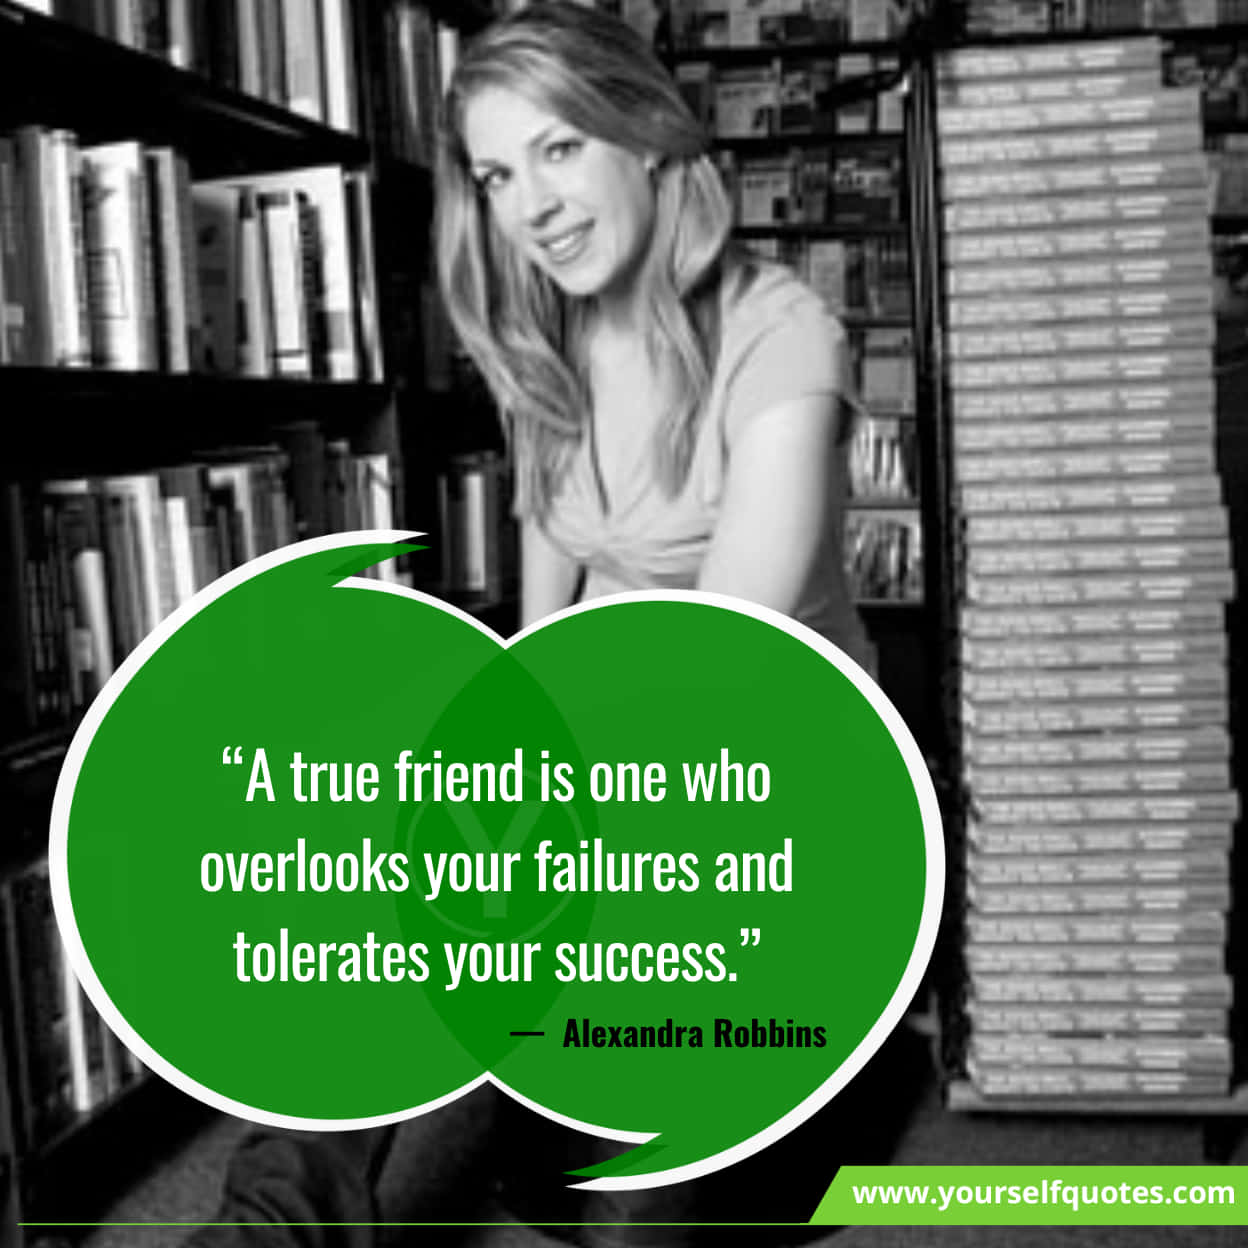 Alexandra Robbins Quotes On Success